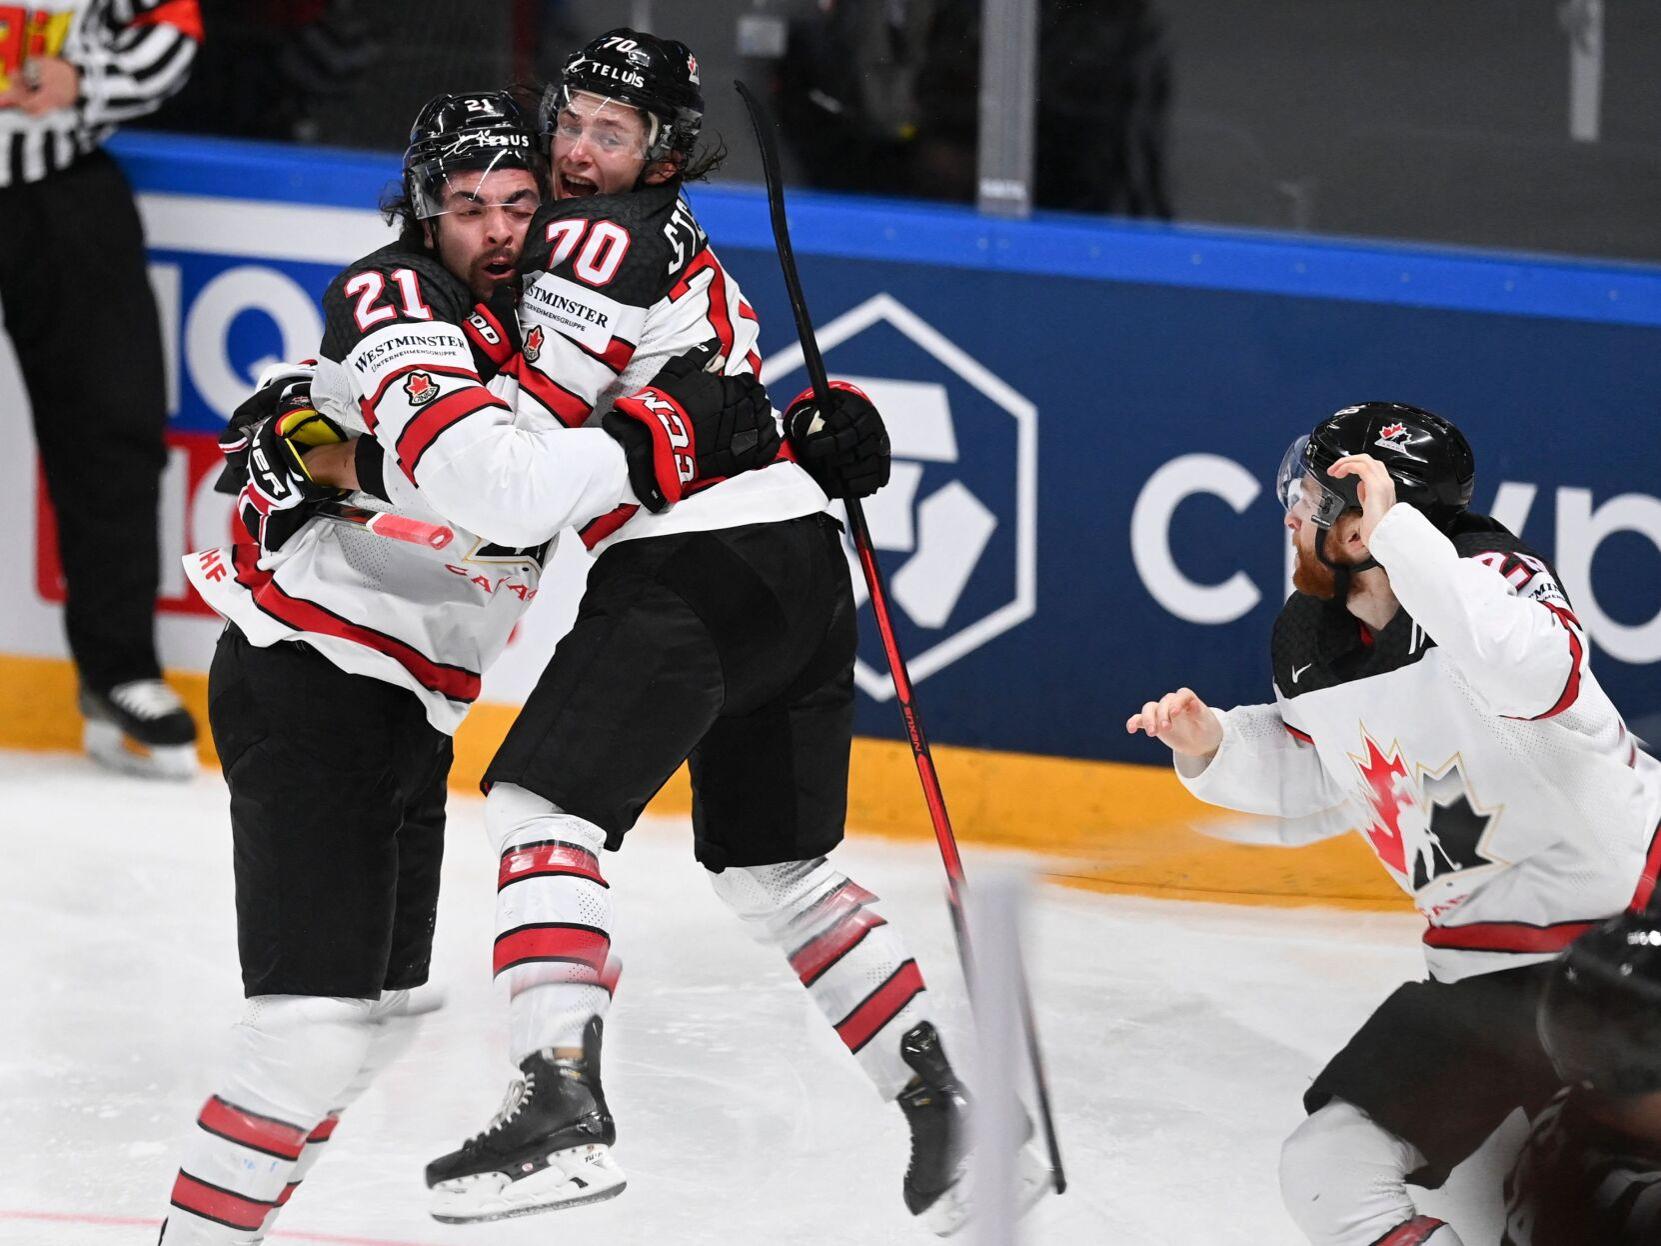 USA upset defending champions Finland to open men's ice hockey